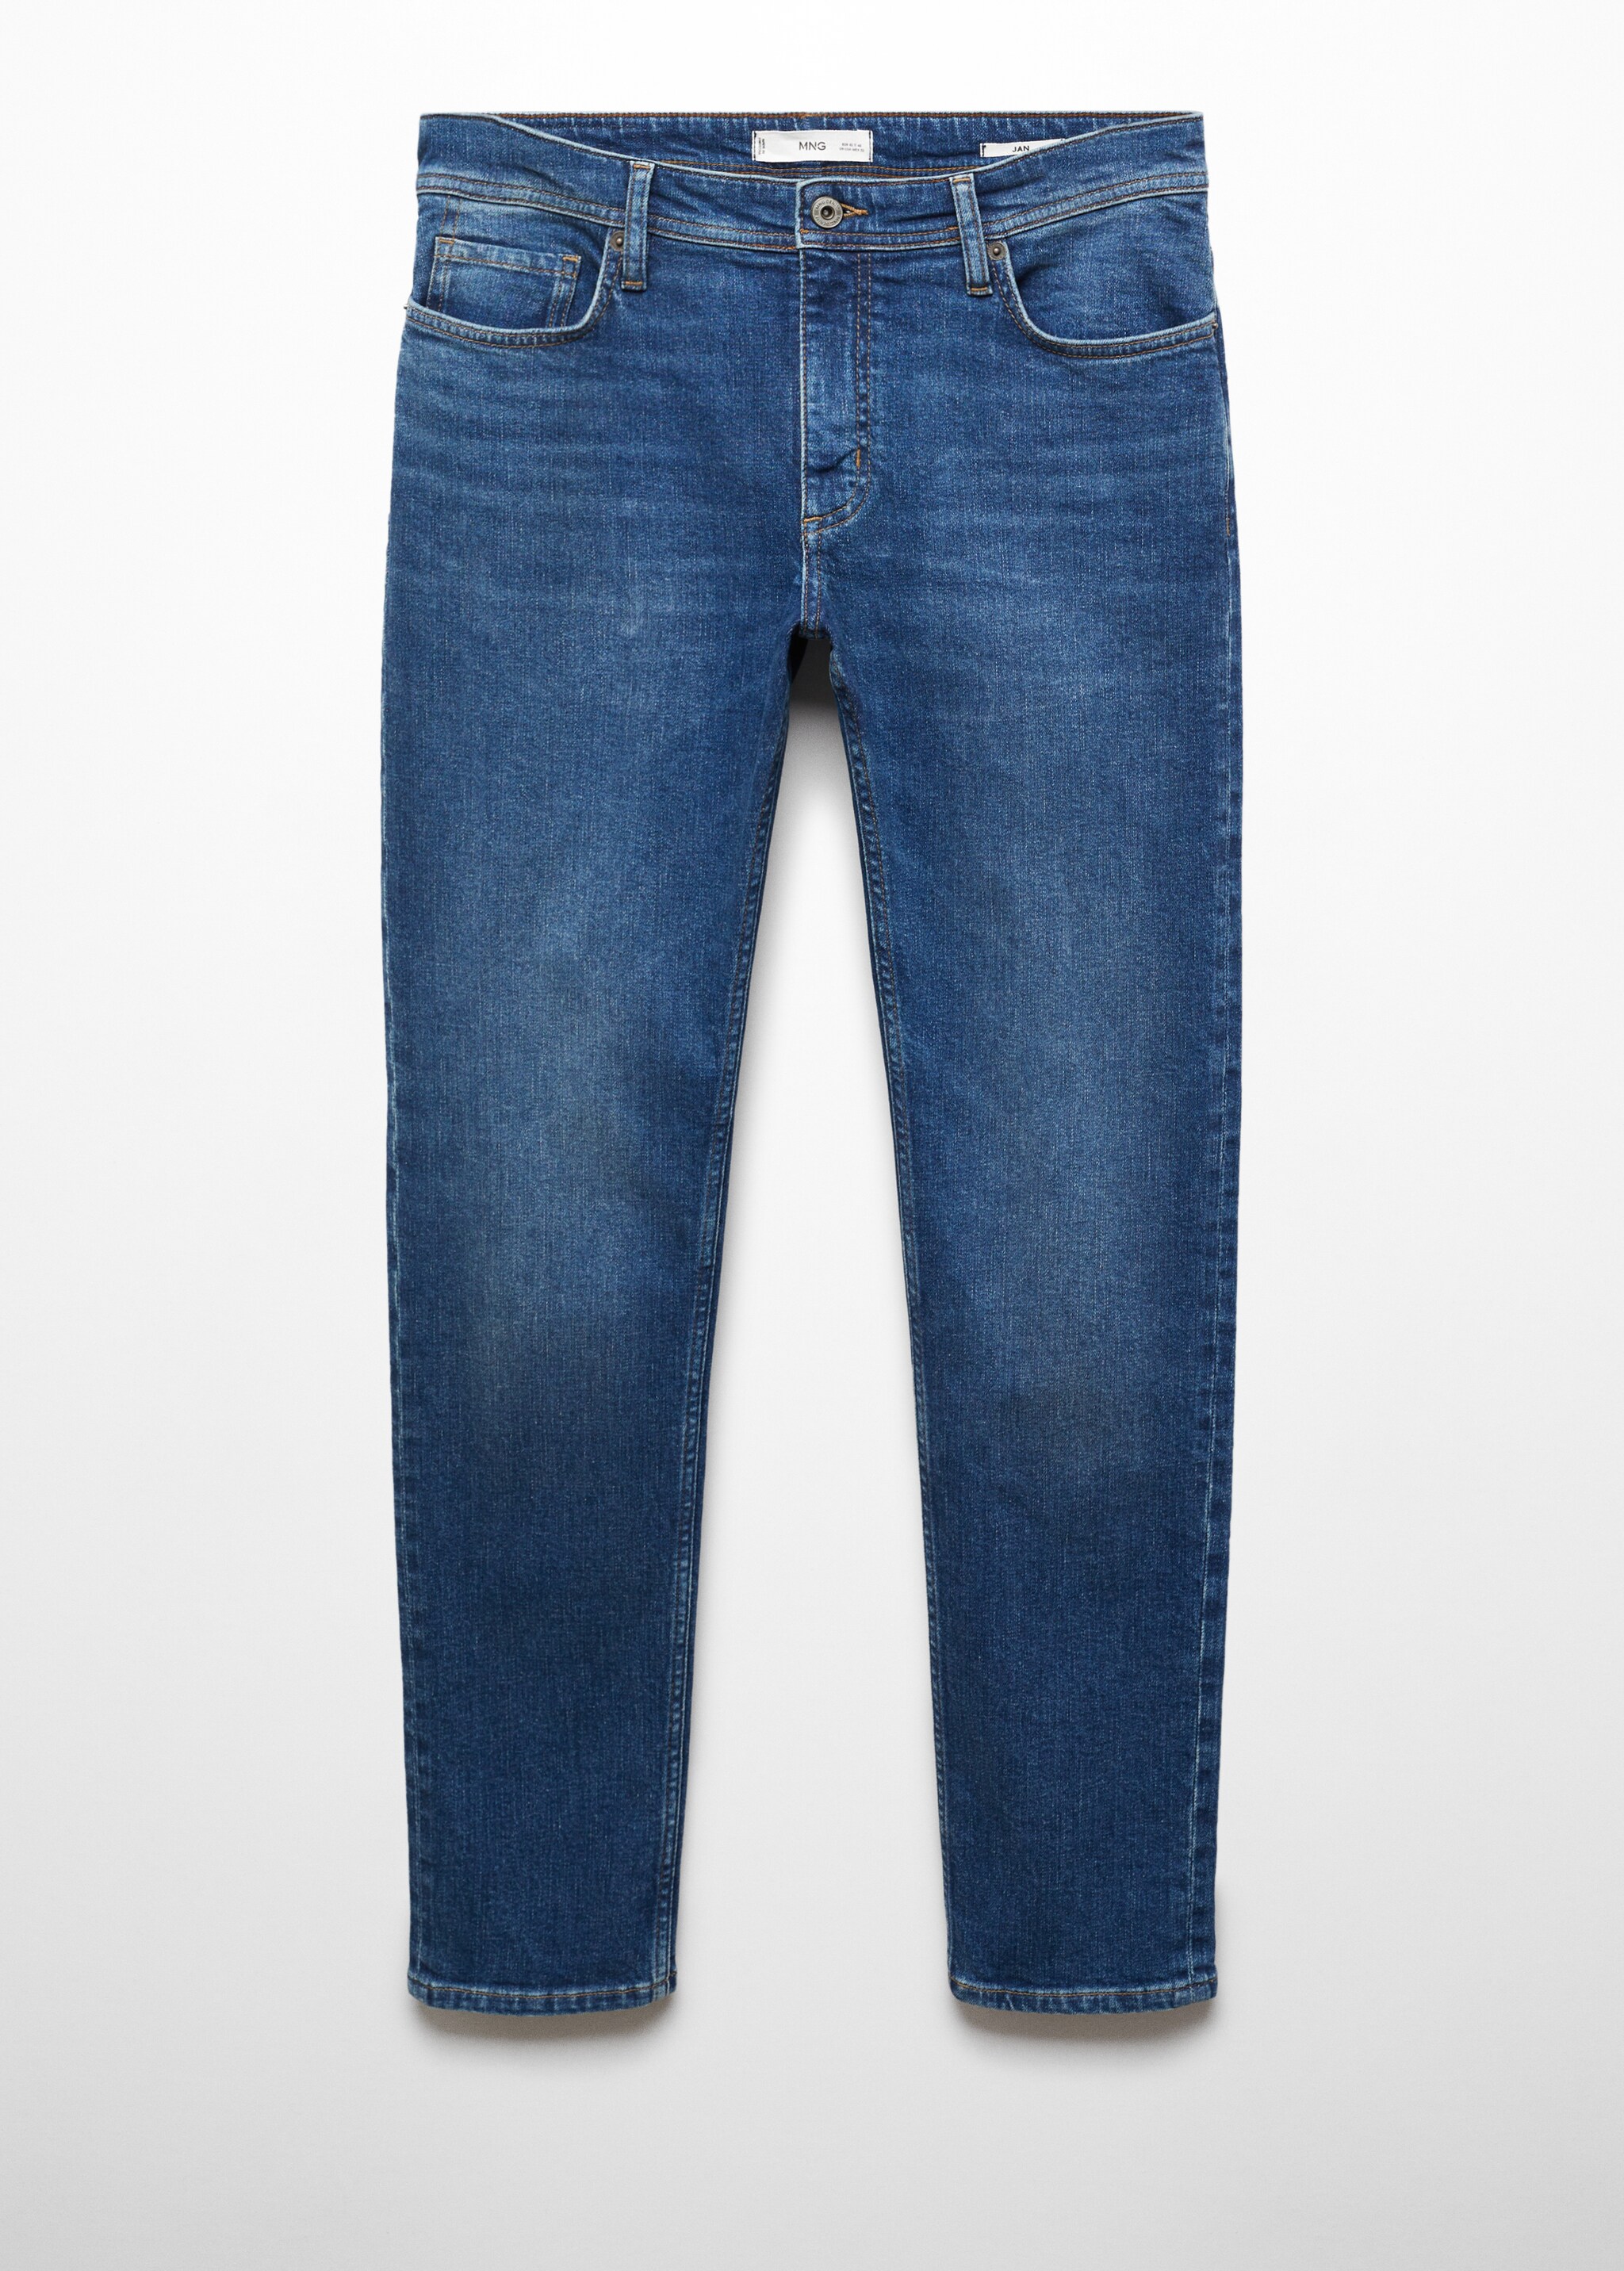 Jeans Jan slim fit  - Artículo sin modelo